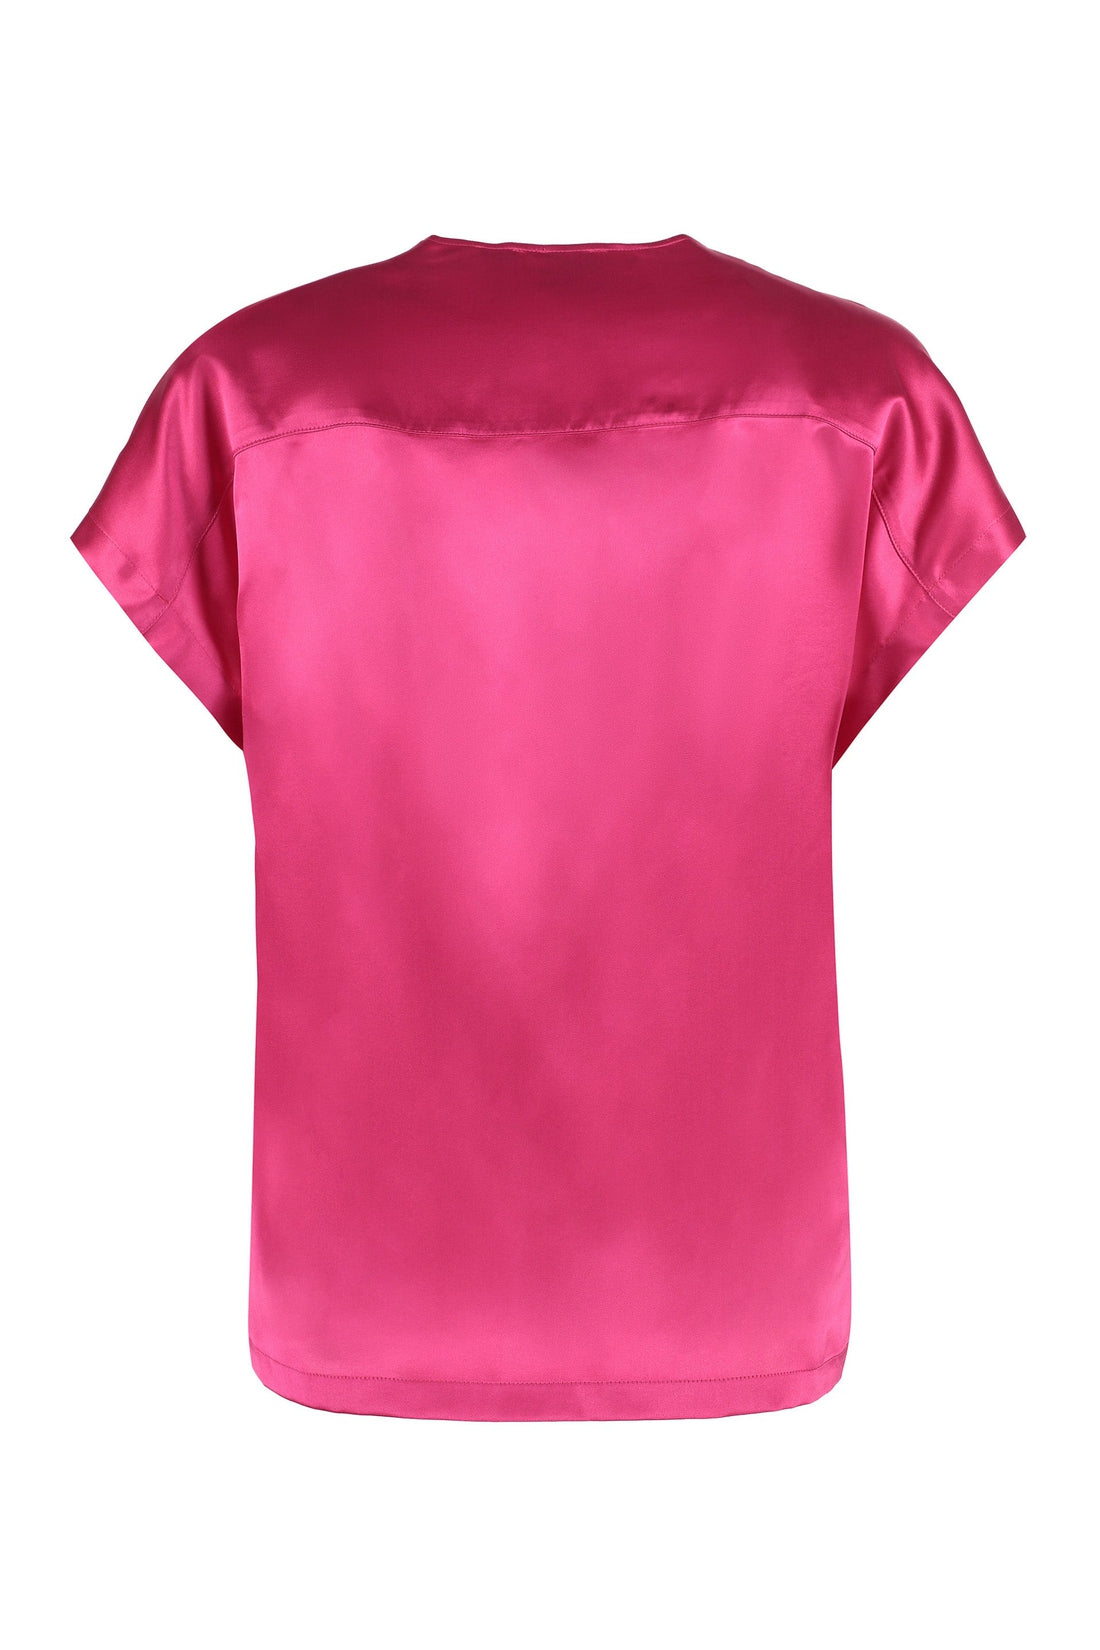 Pinko-OUTLET-SALE-Breve silk blouse-ARCHIVIST